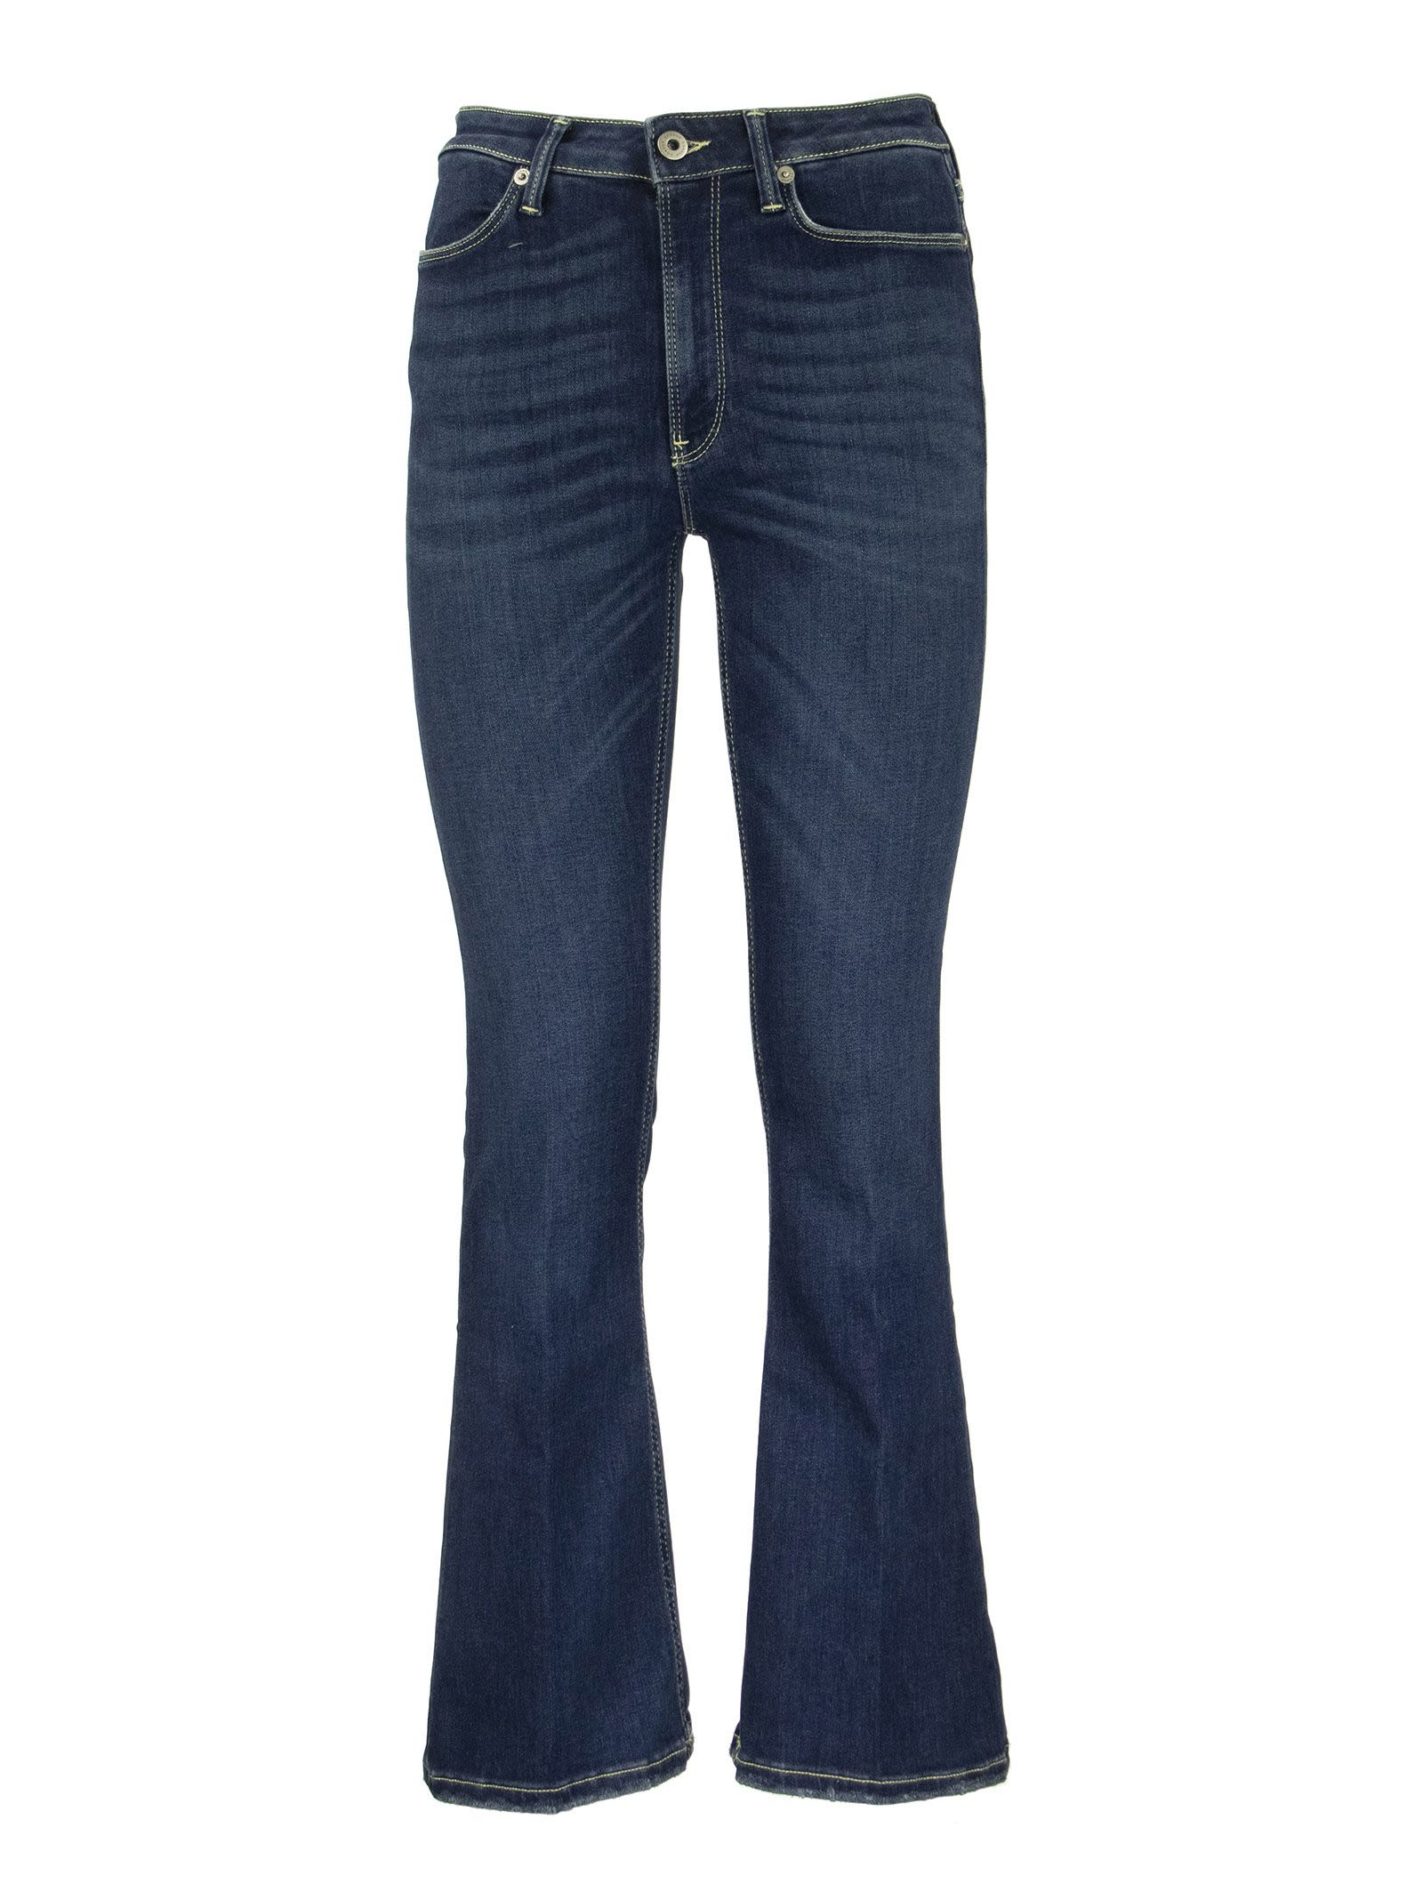 Mandy super skinny jeans - Bellettini.com